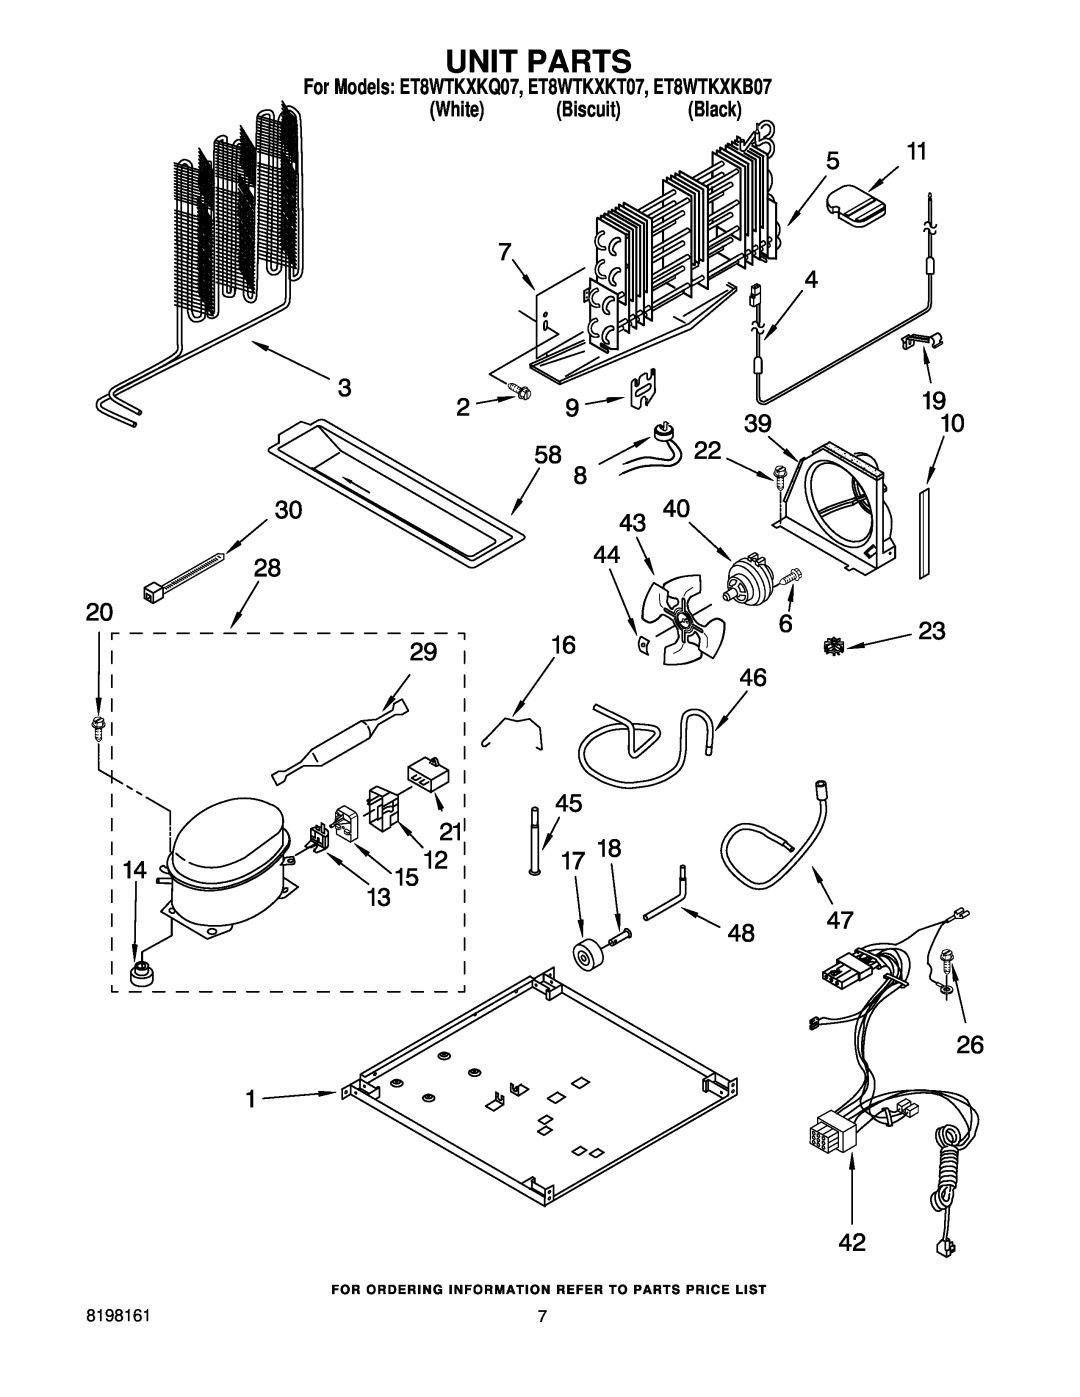 Whirlpool manual Unit Parts, For Models ET8WTKXKQ07, ET8WTKXKT07, ET8WTKXKB07 White Biscuit Black 